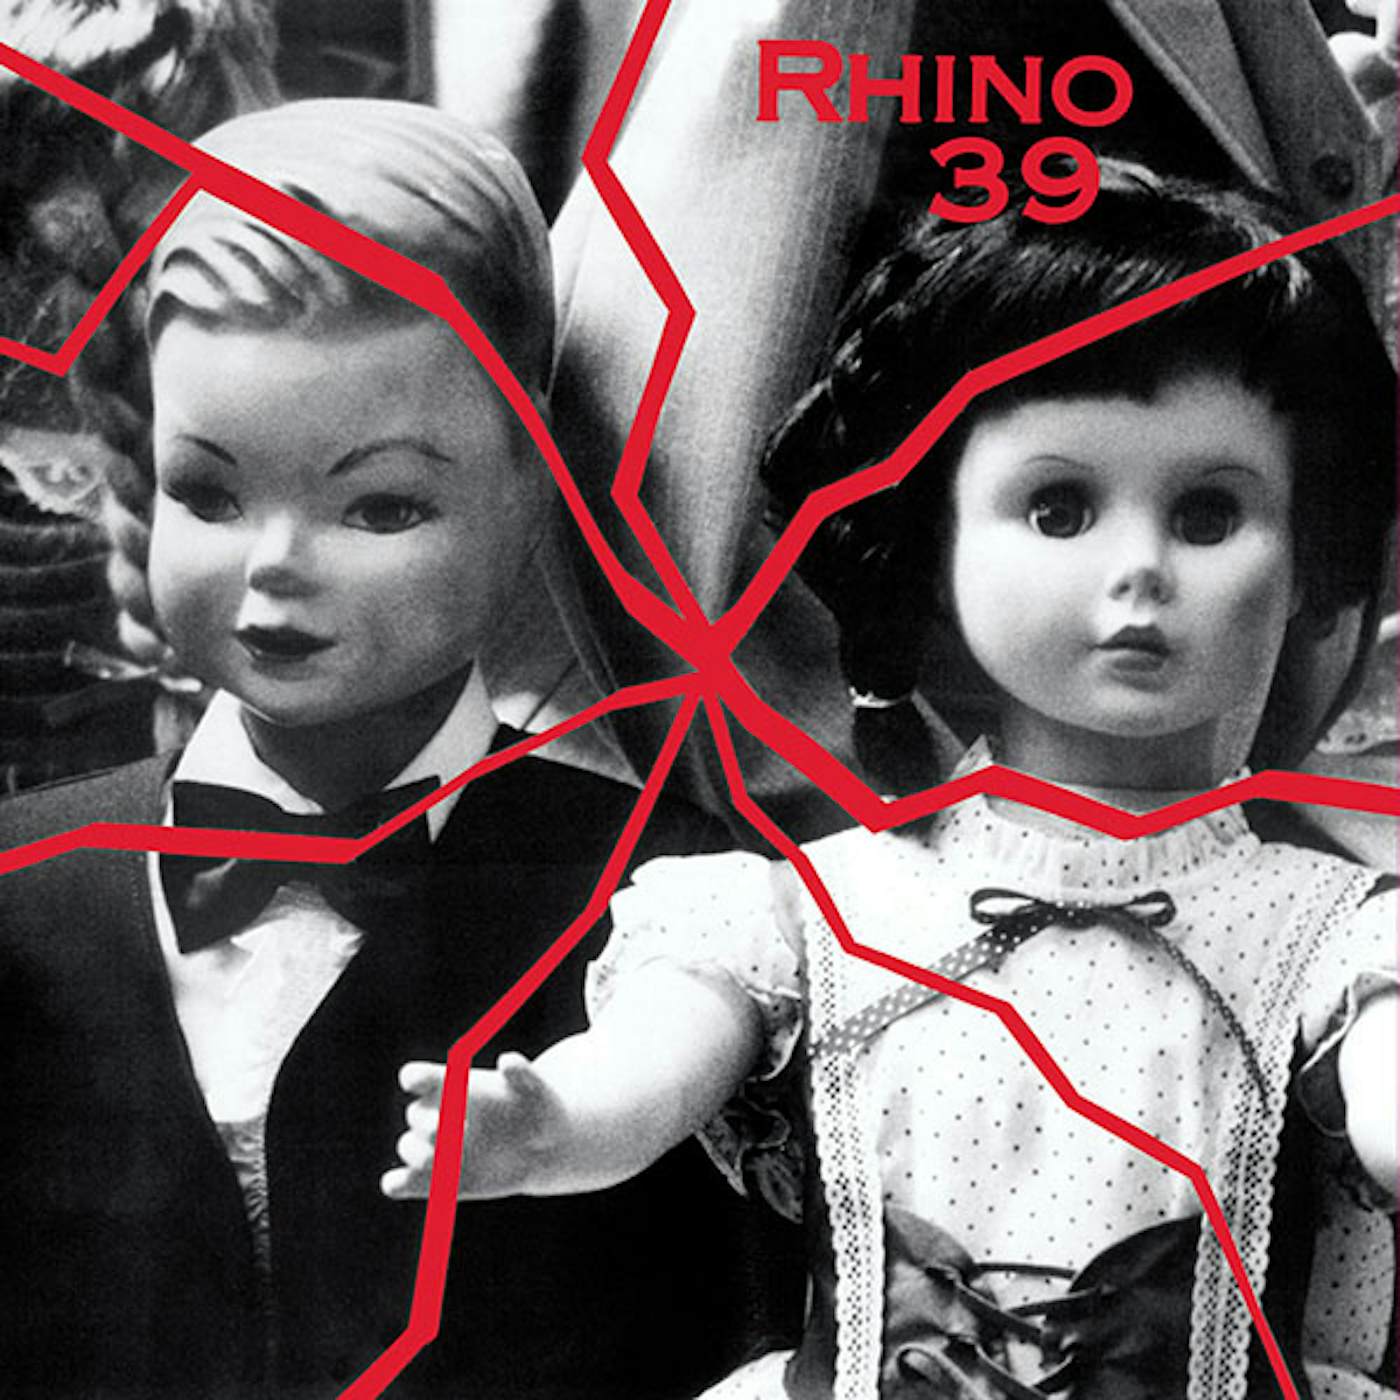 Rhino 39 Vinyl Record